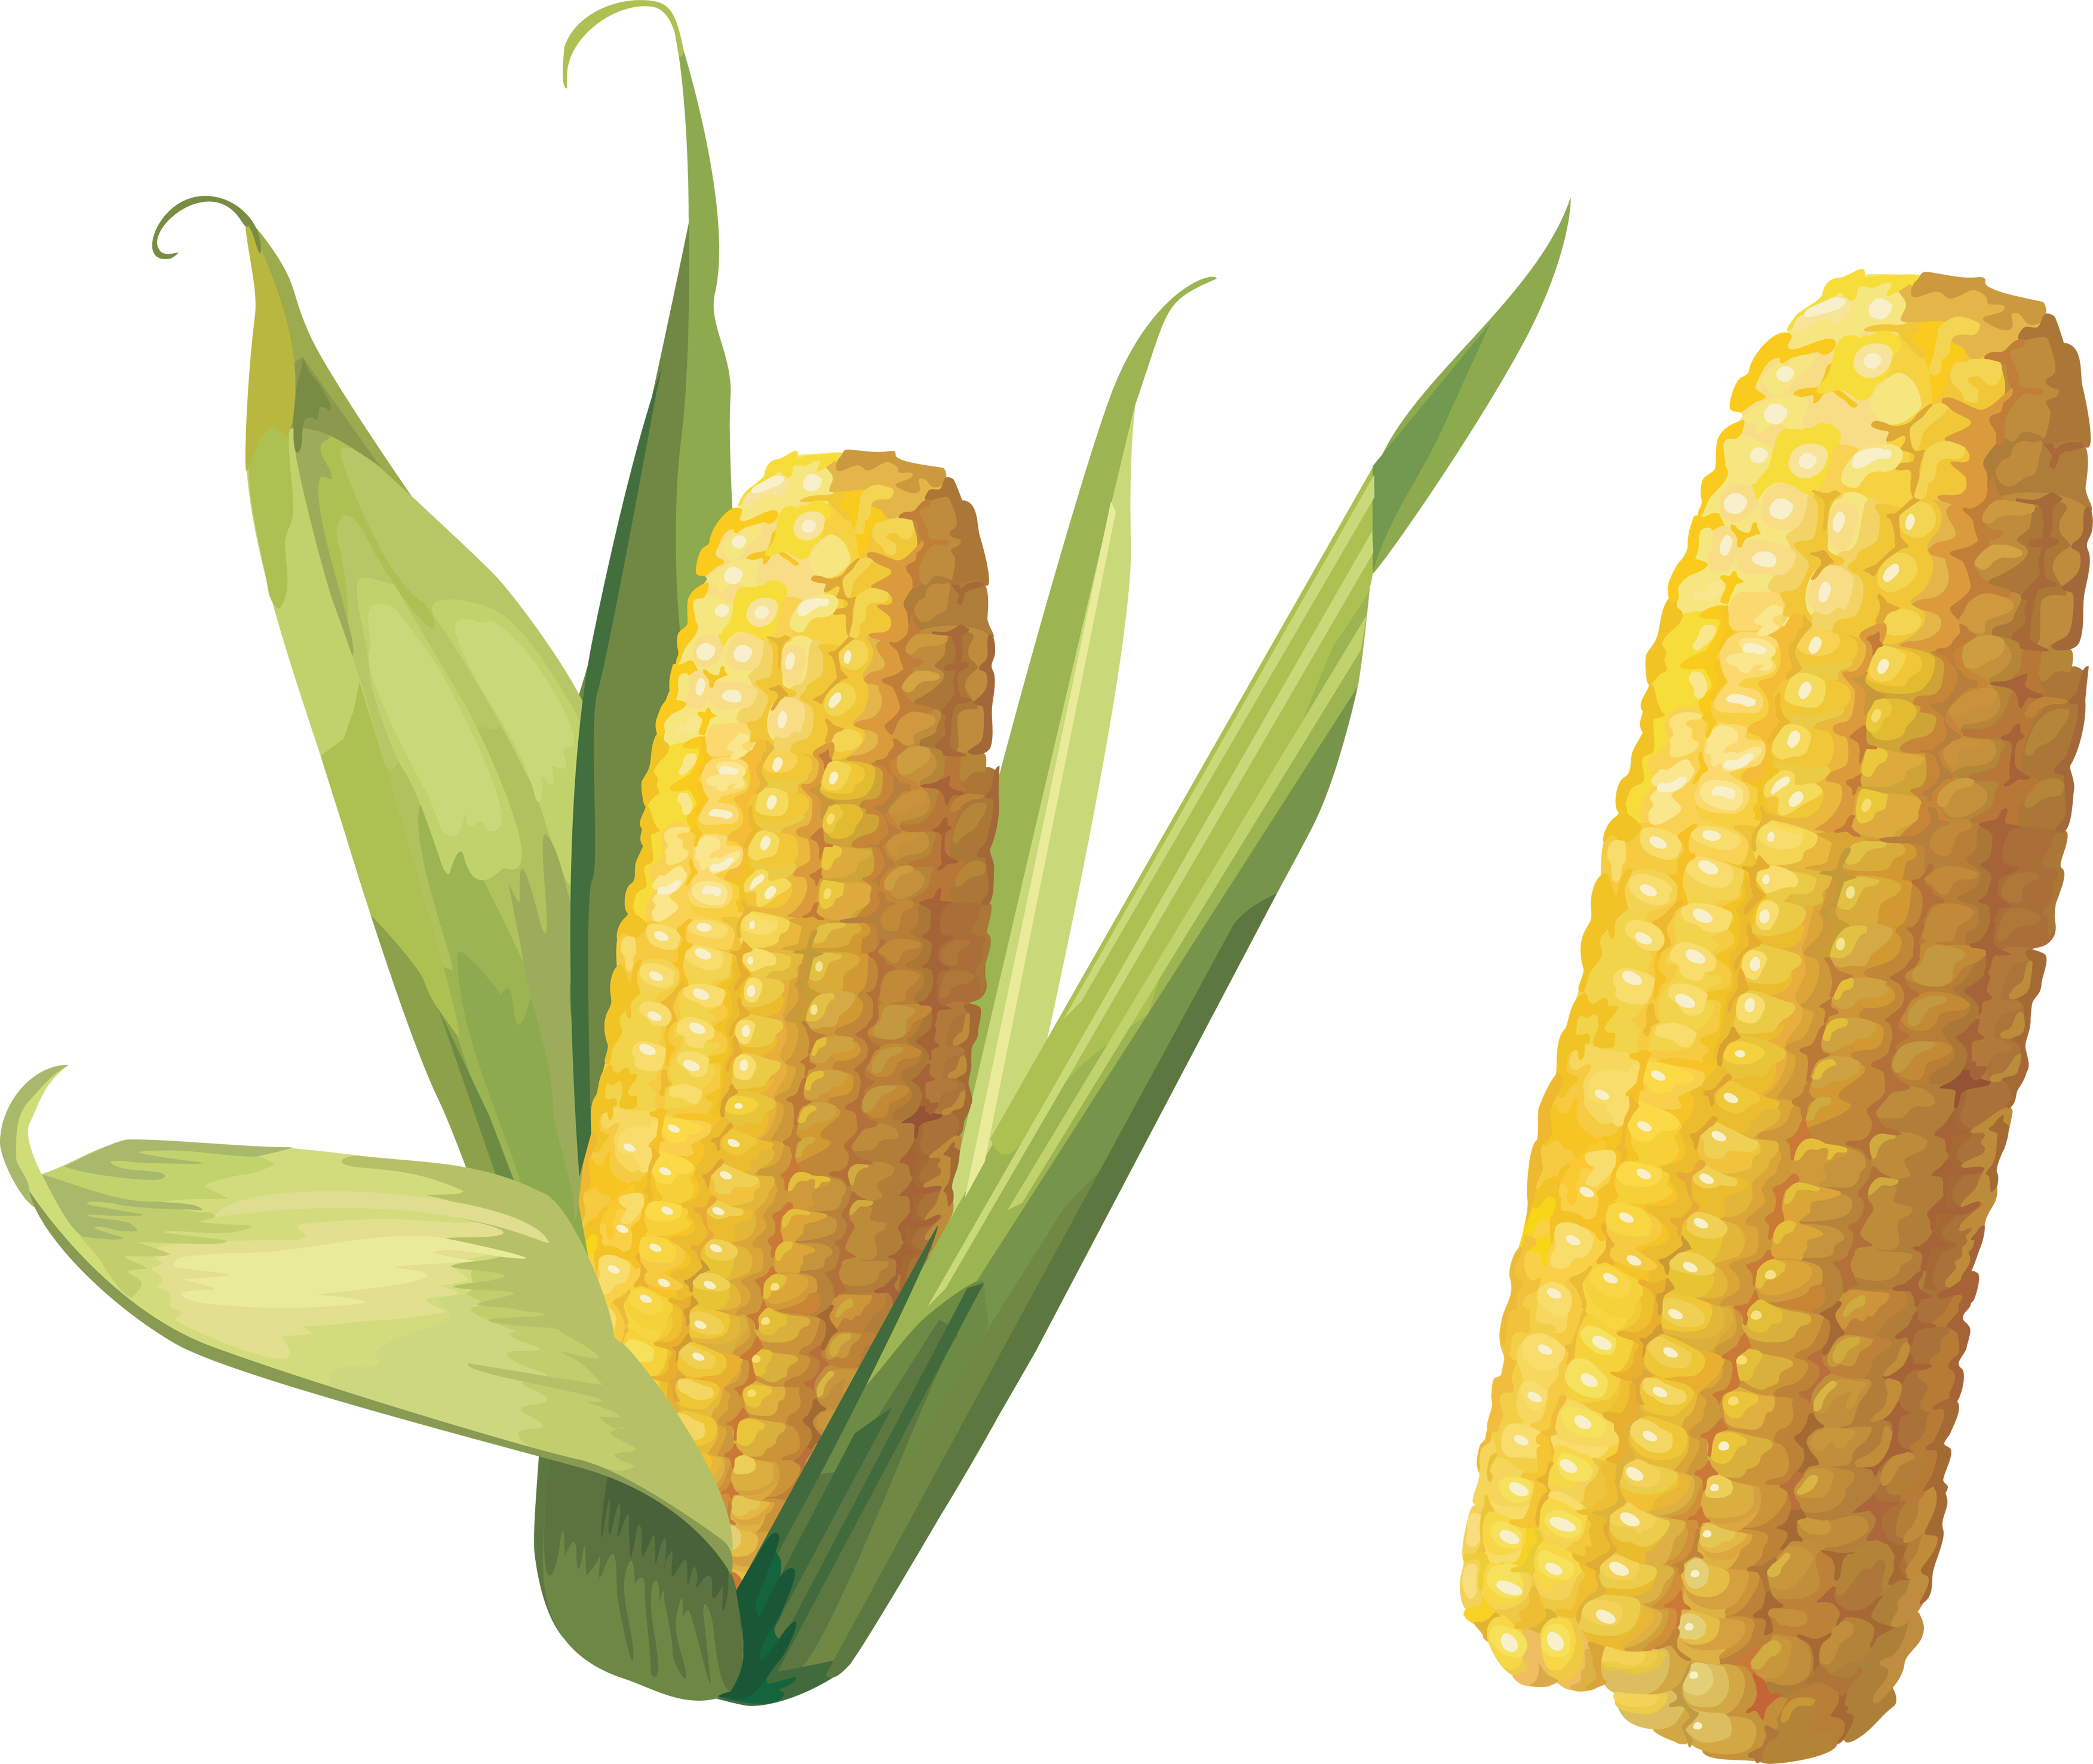 Vegetables clipart corn. Twenty three isolated stock